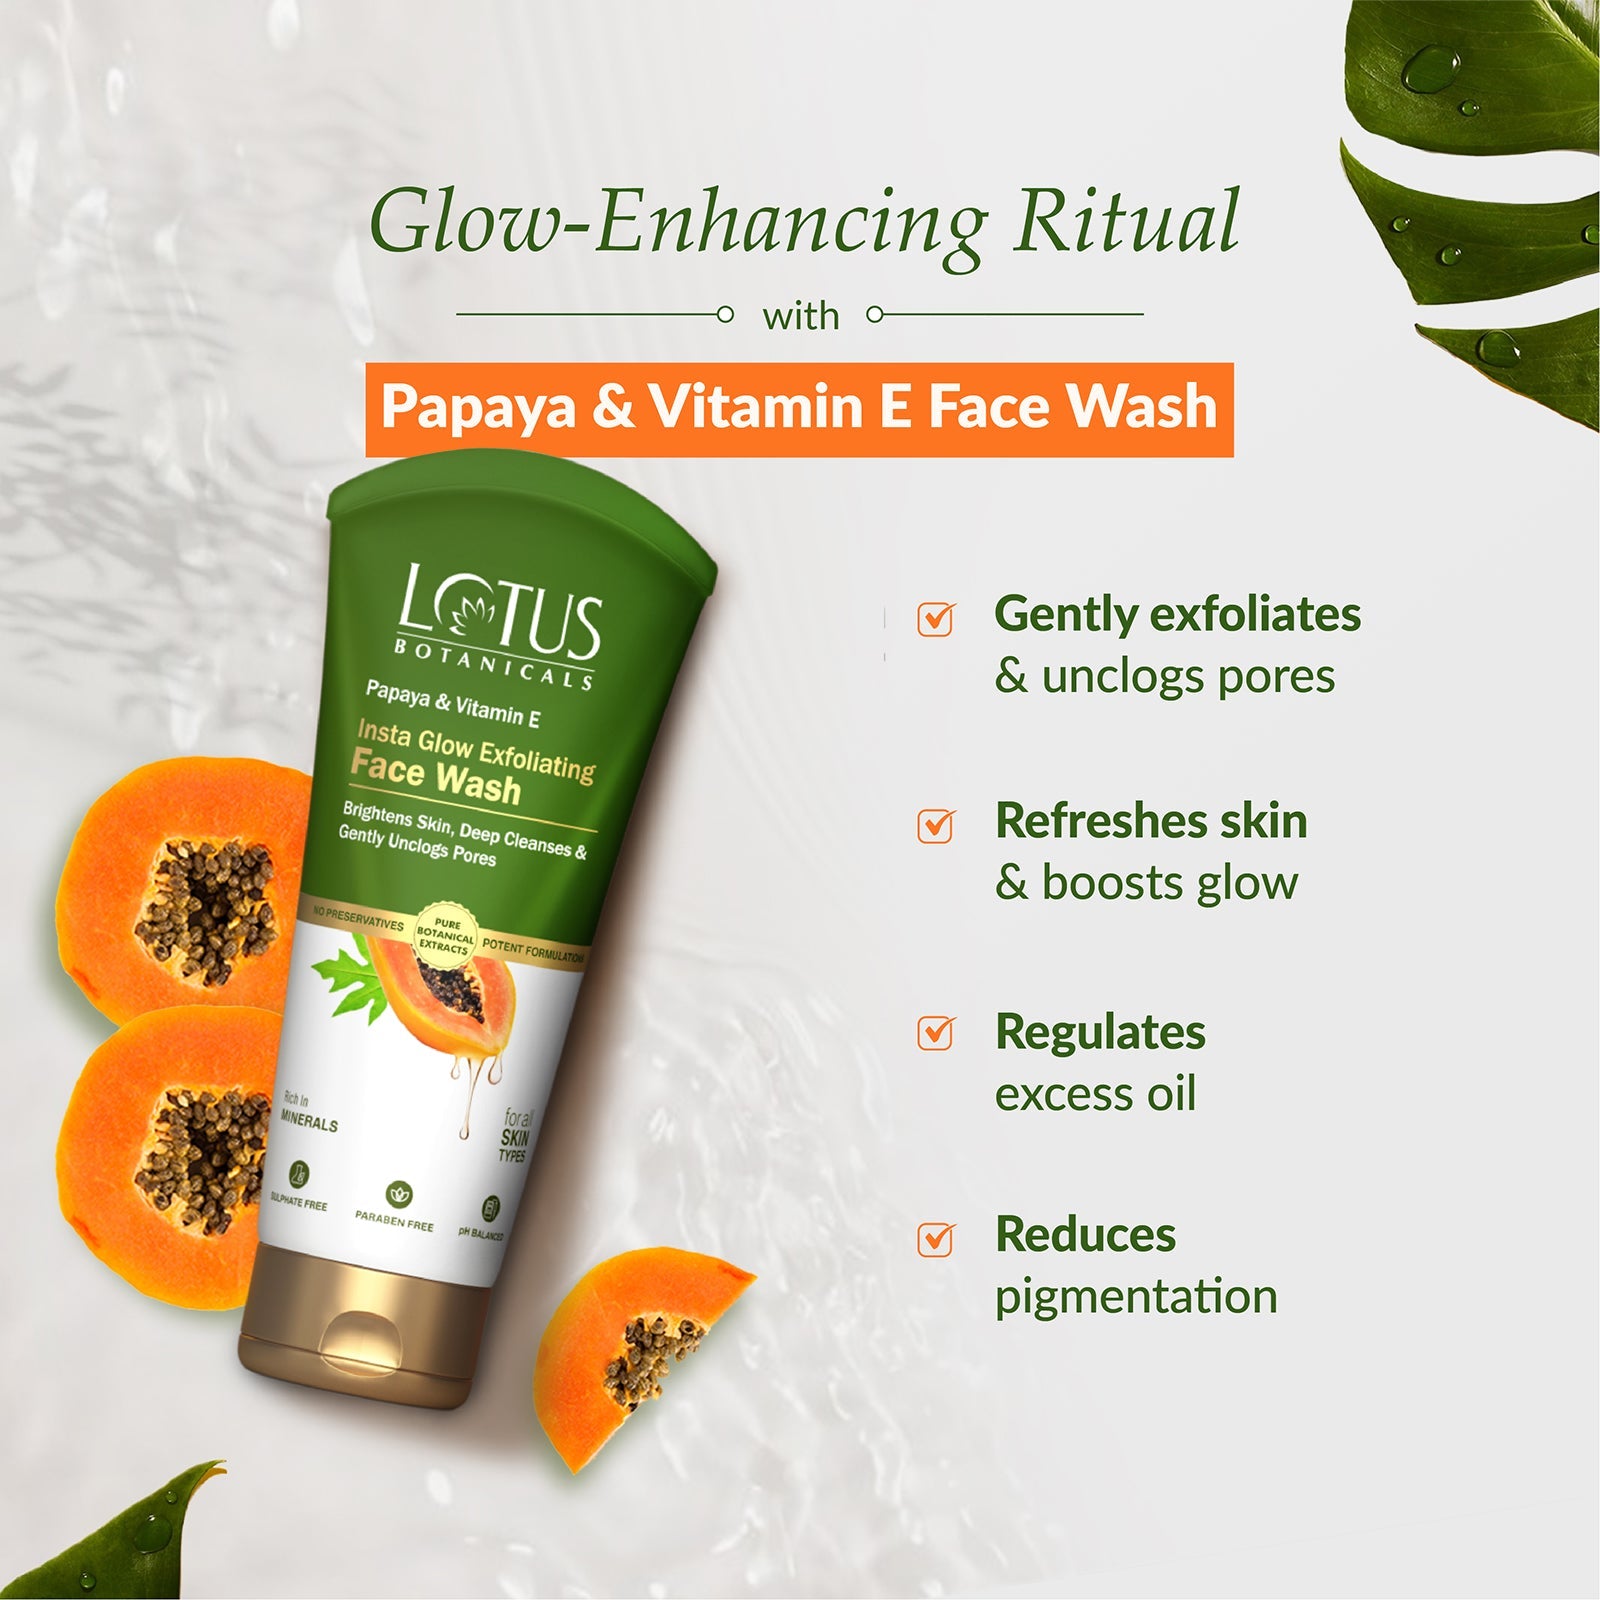 Papaya & Vitamin E Insta Glow Exfoliating Facewash - Refreshing and Nourishing Skincare Product with Natural Ingredients